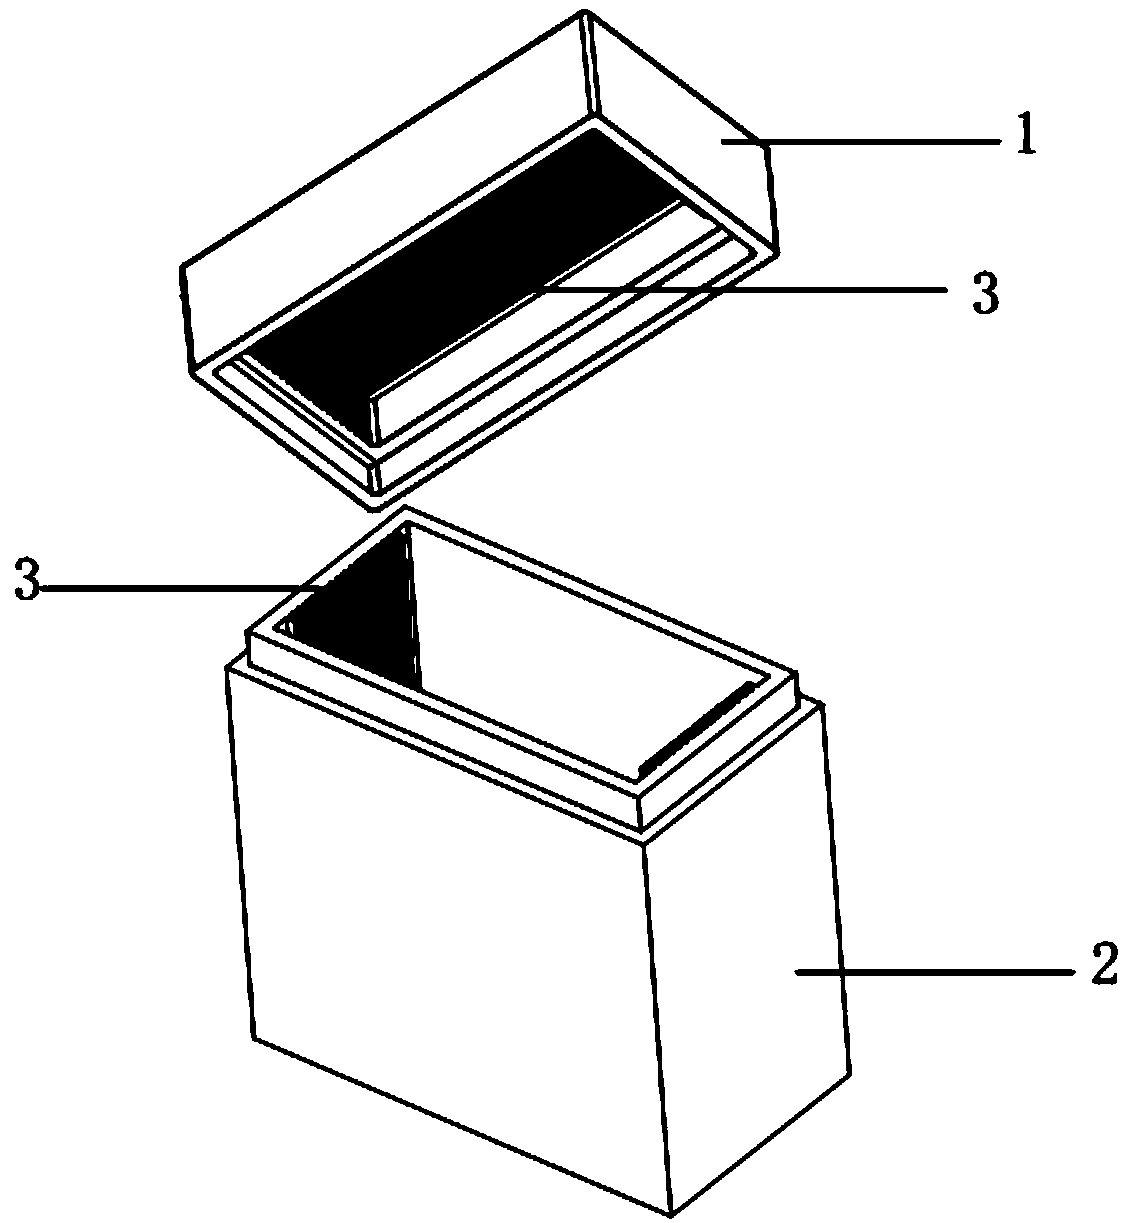 Liquid crystal panel packaging box